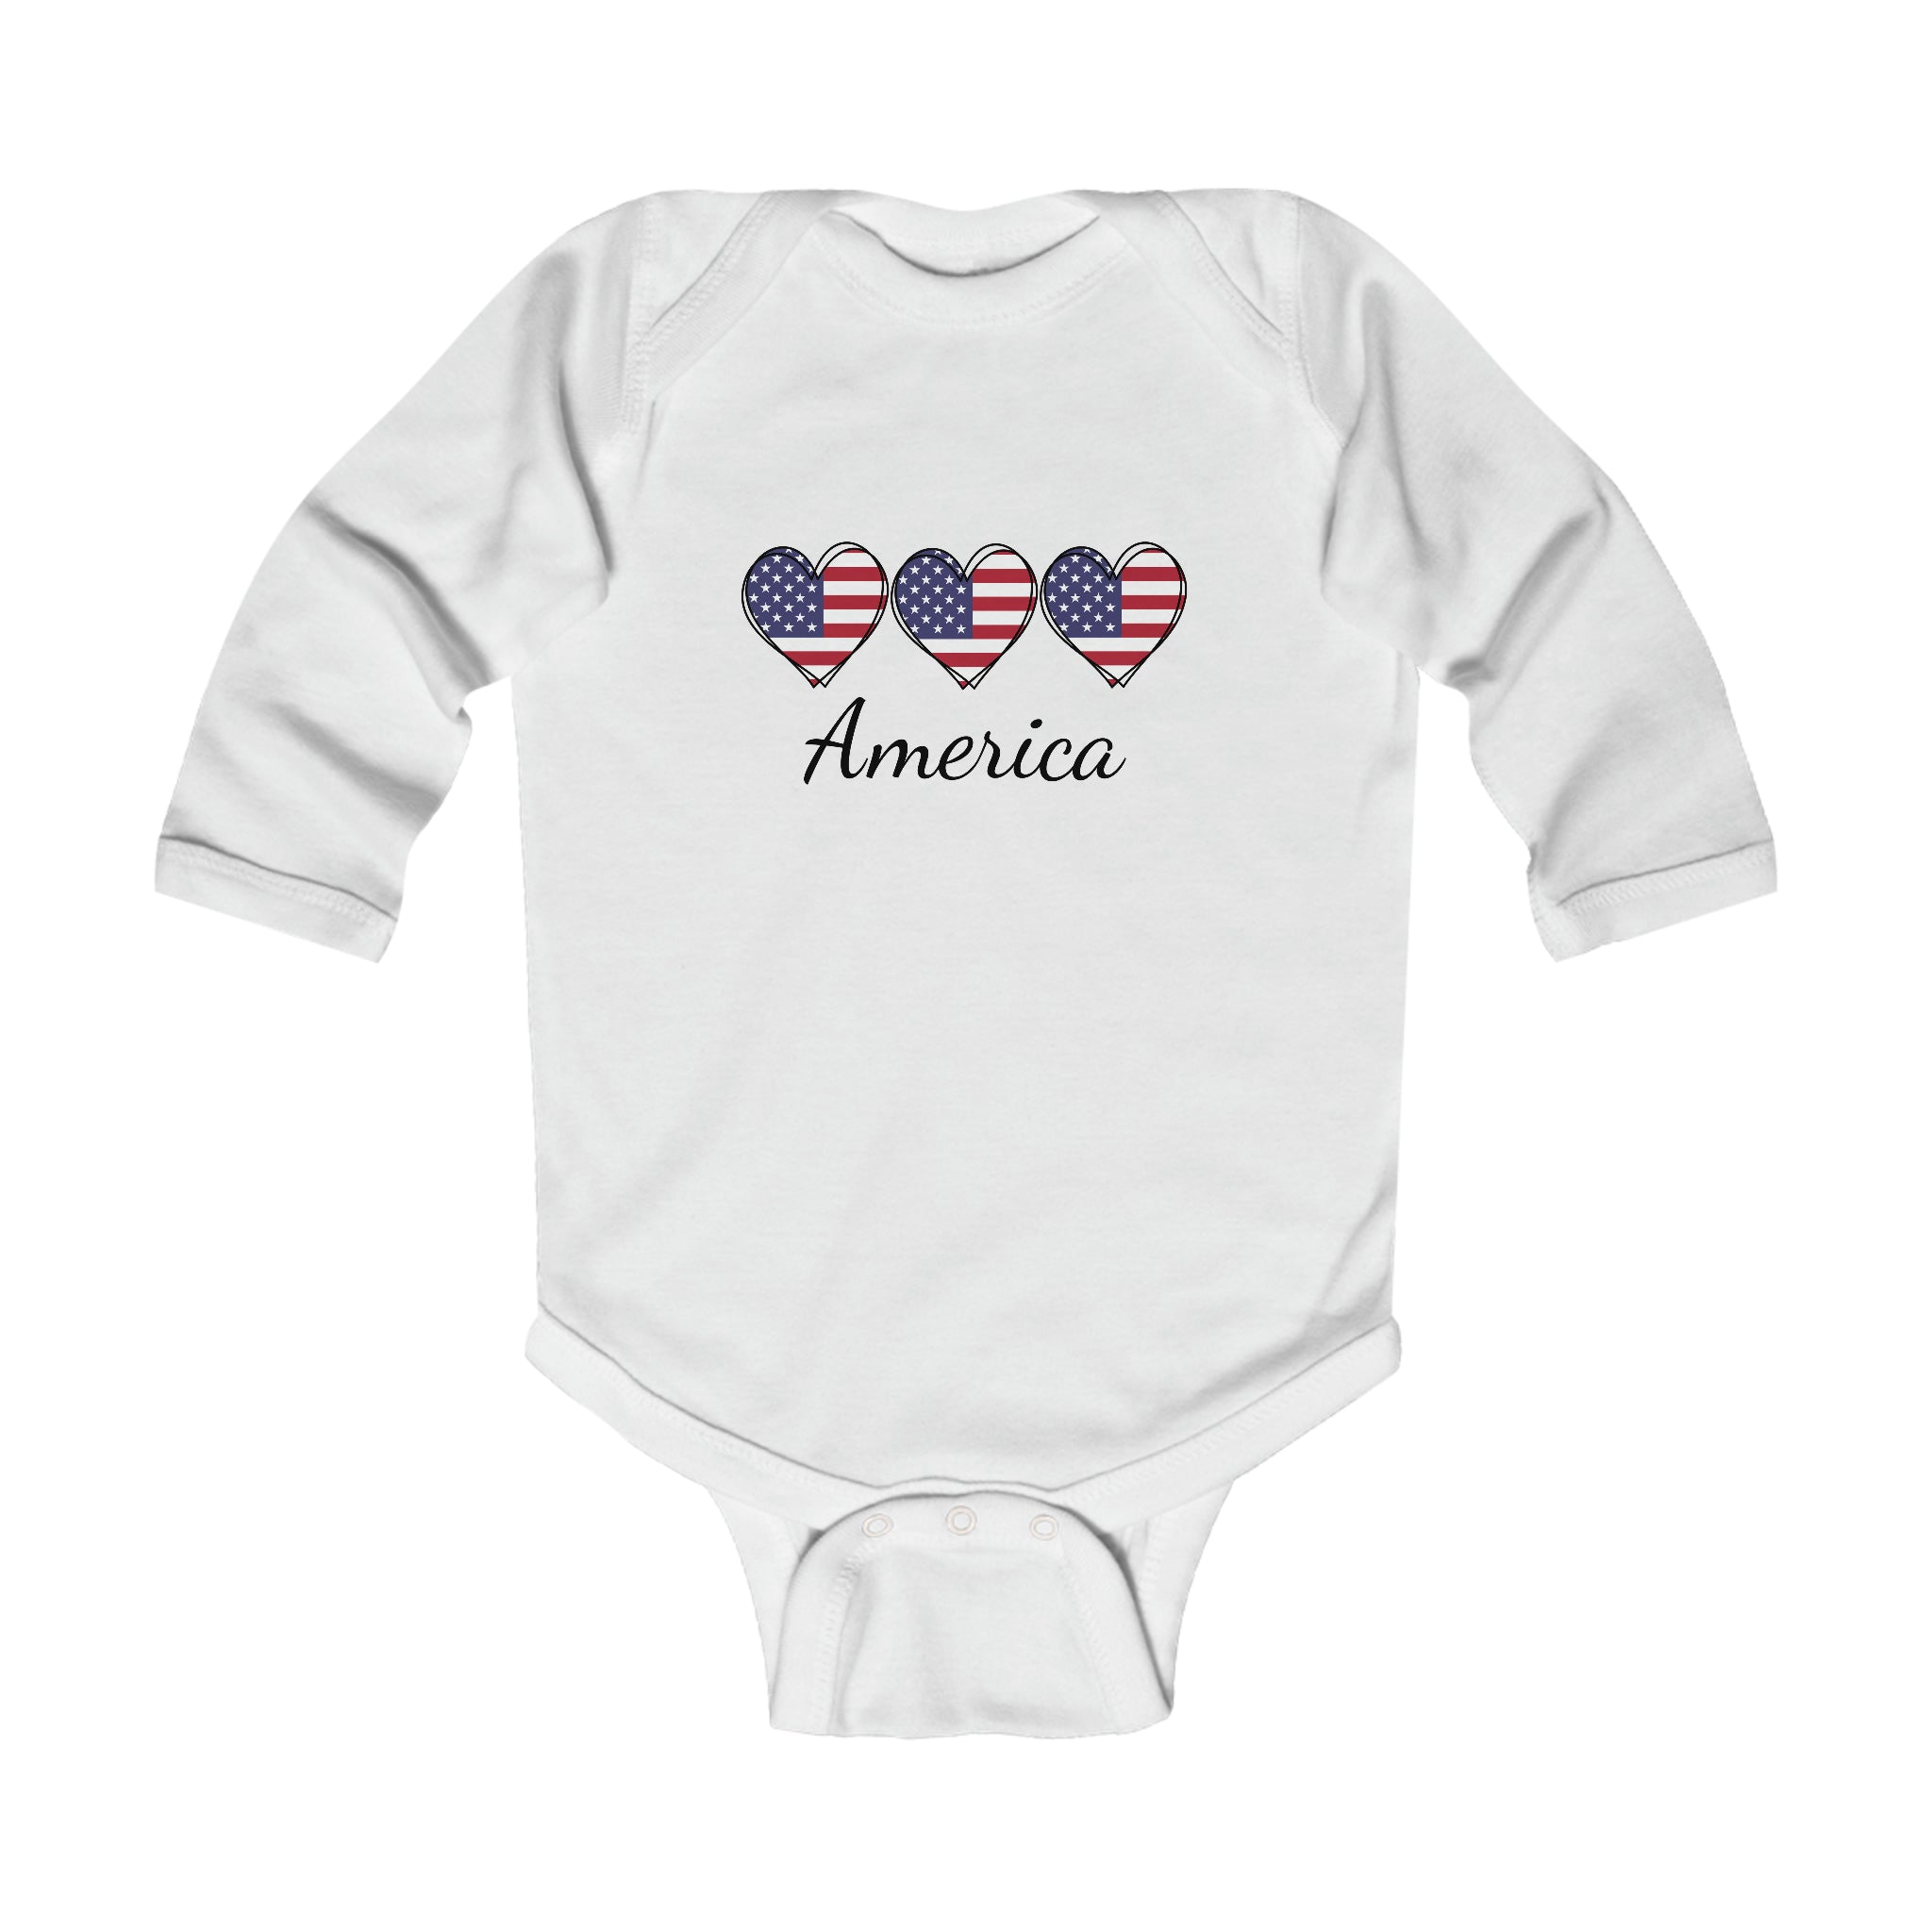 America 3 Hearts Long Sleeve Baby Bodysuit